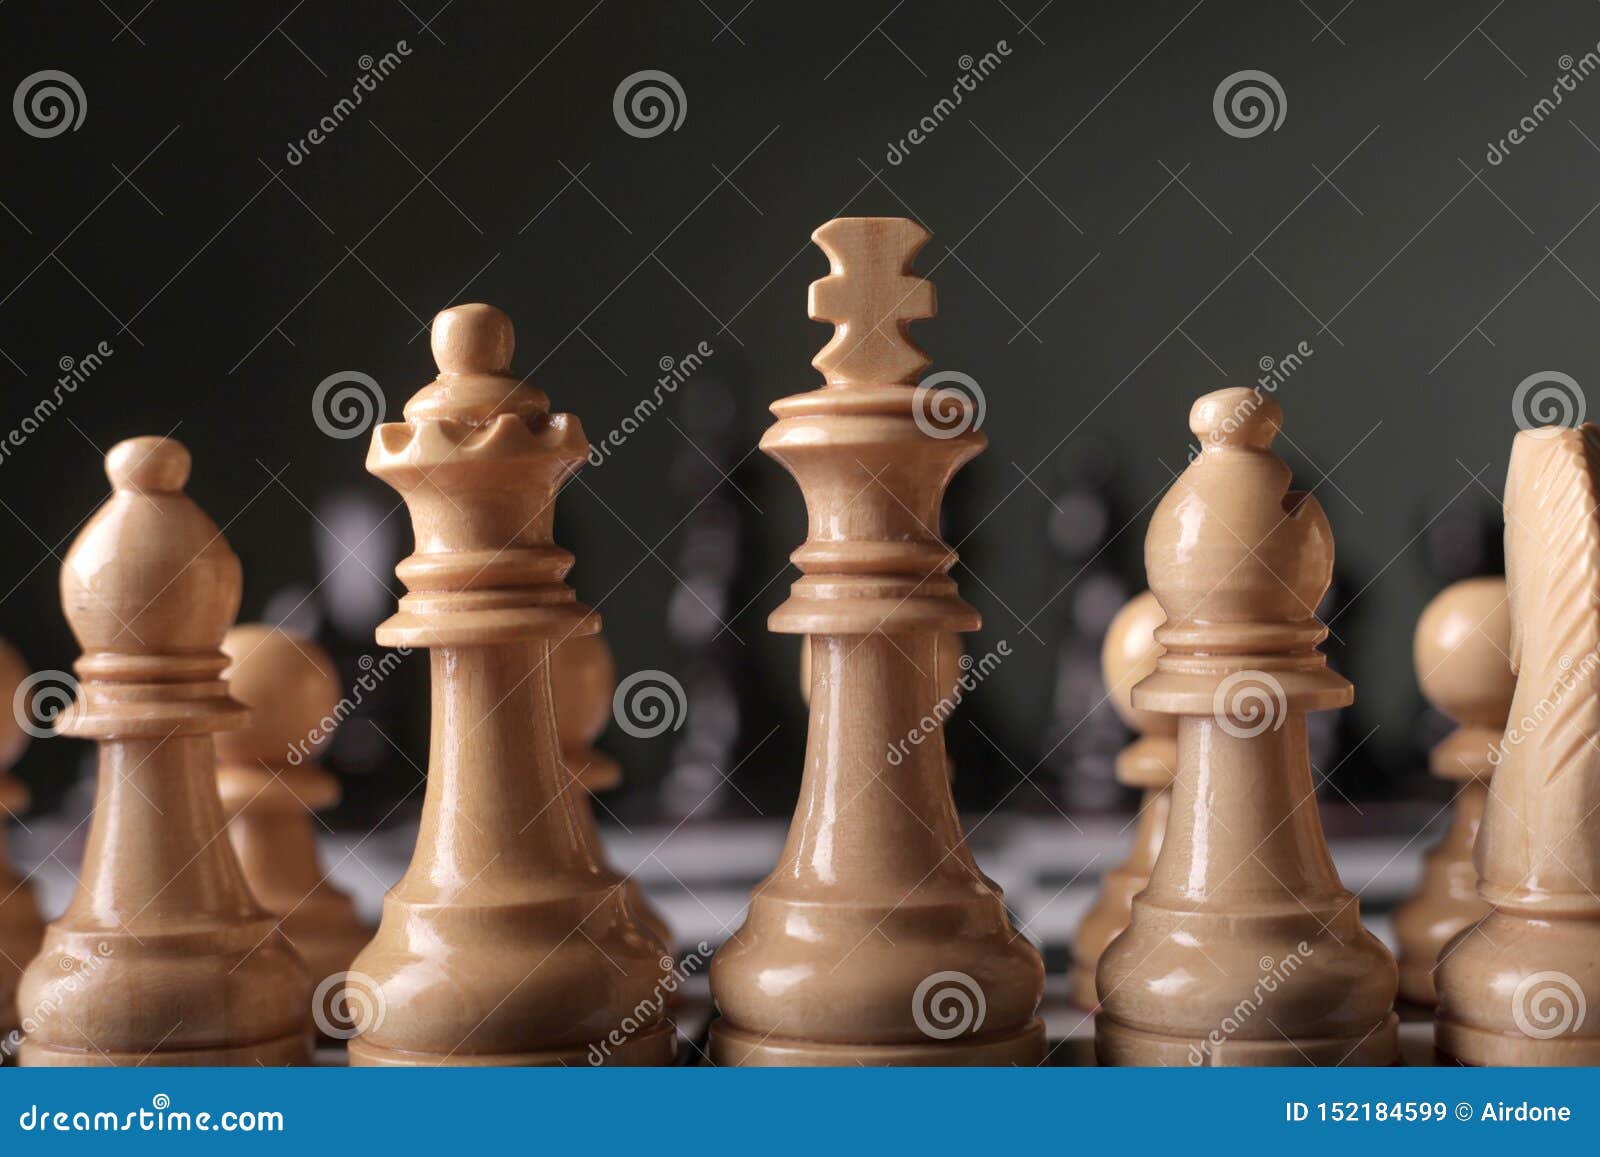 chess, close up image